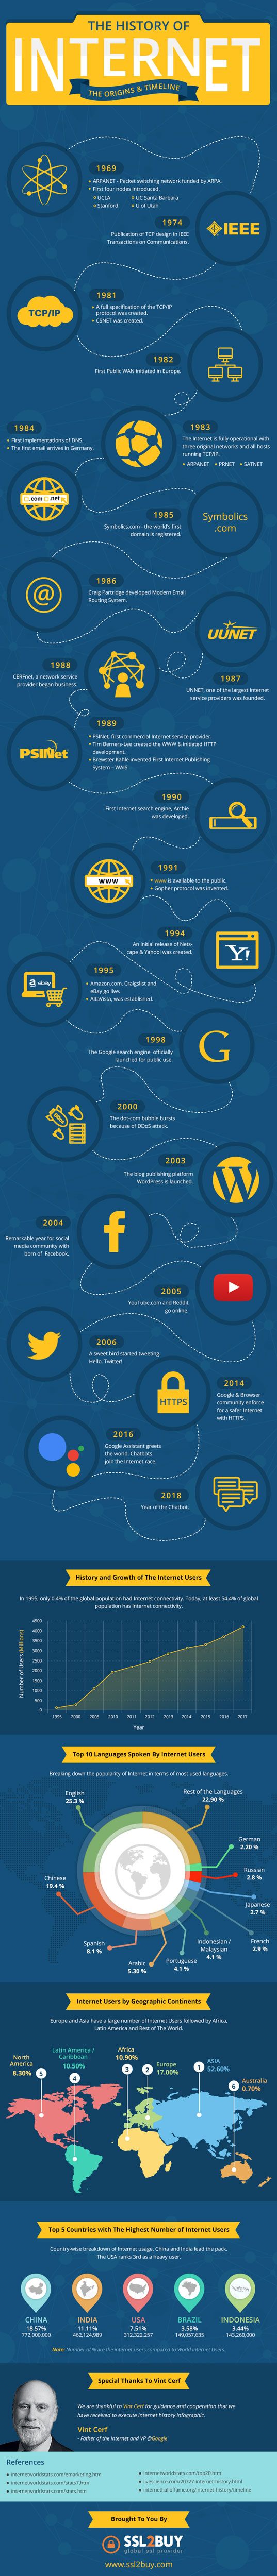 Geschichte der Internet-Infografik